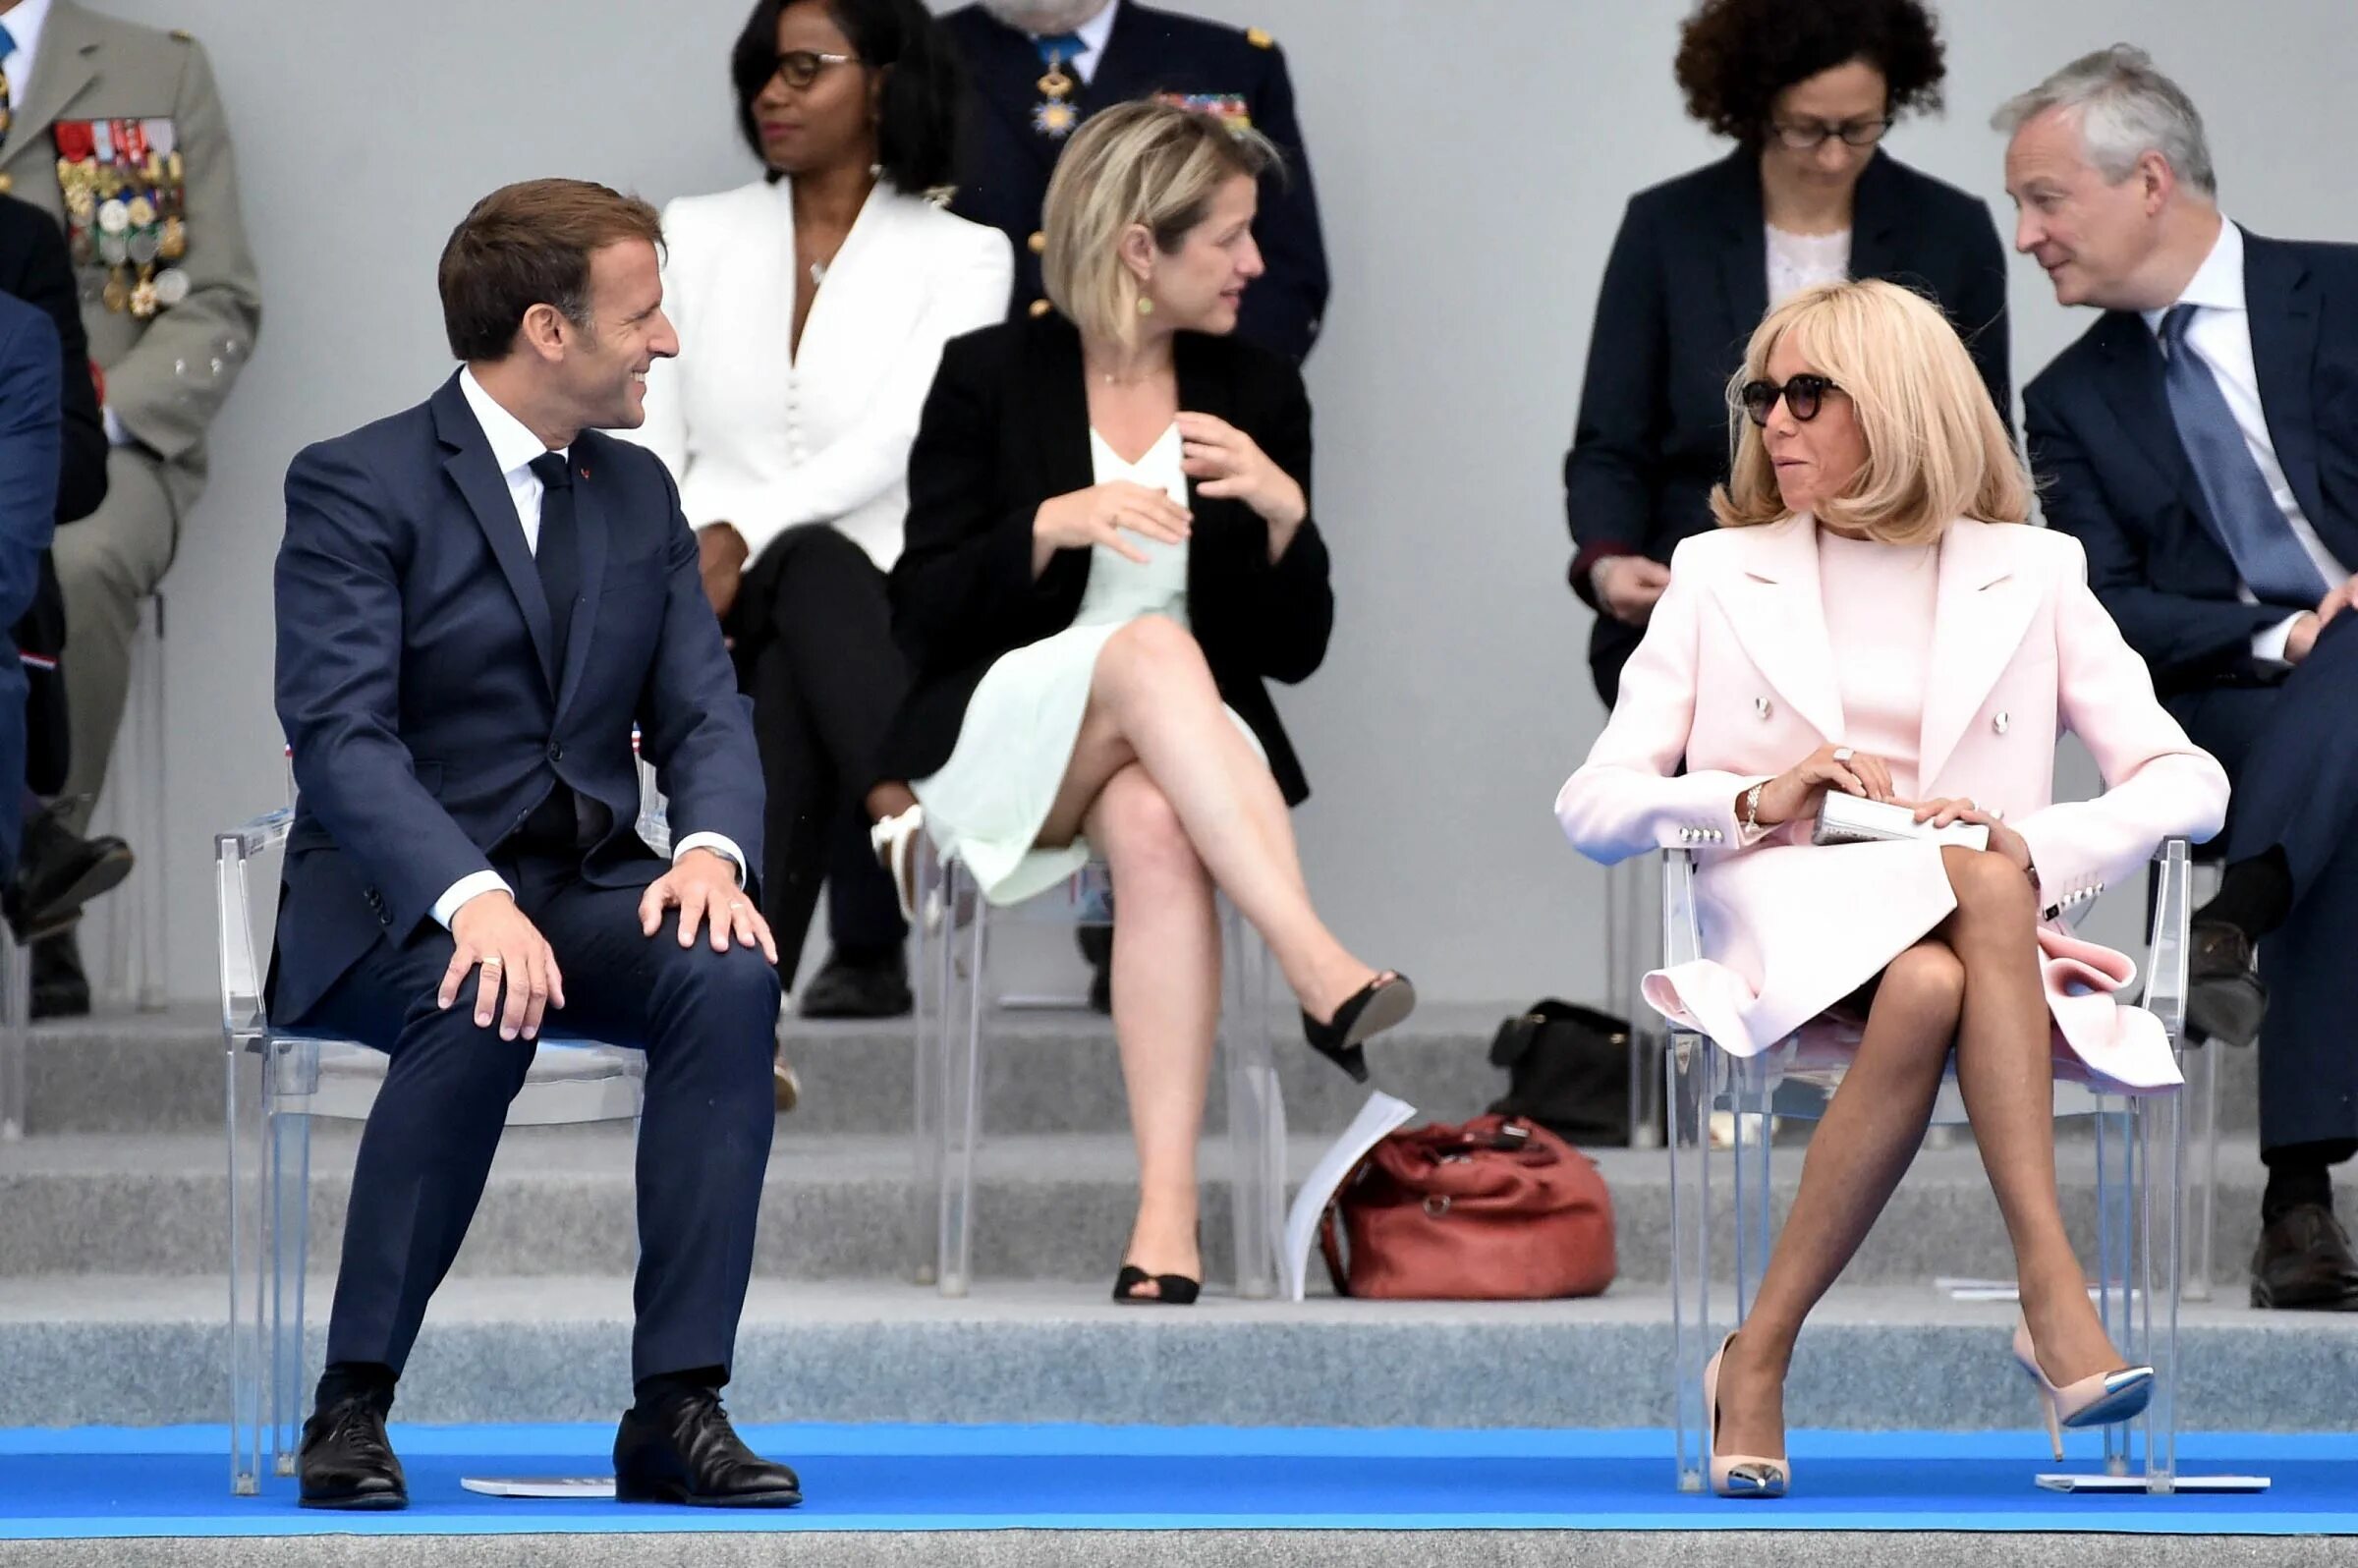 Макрон в спортзале. Брижит Макрон 2022. Брижит Макрон и Эммануэль Макрон. Жена президента Франции Брижит Макрон. Макрон с женой 2022.